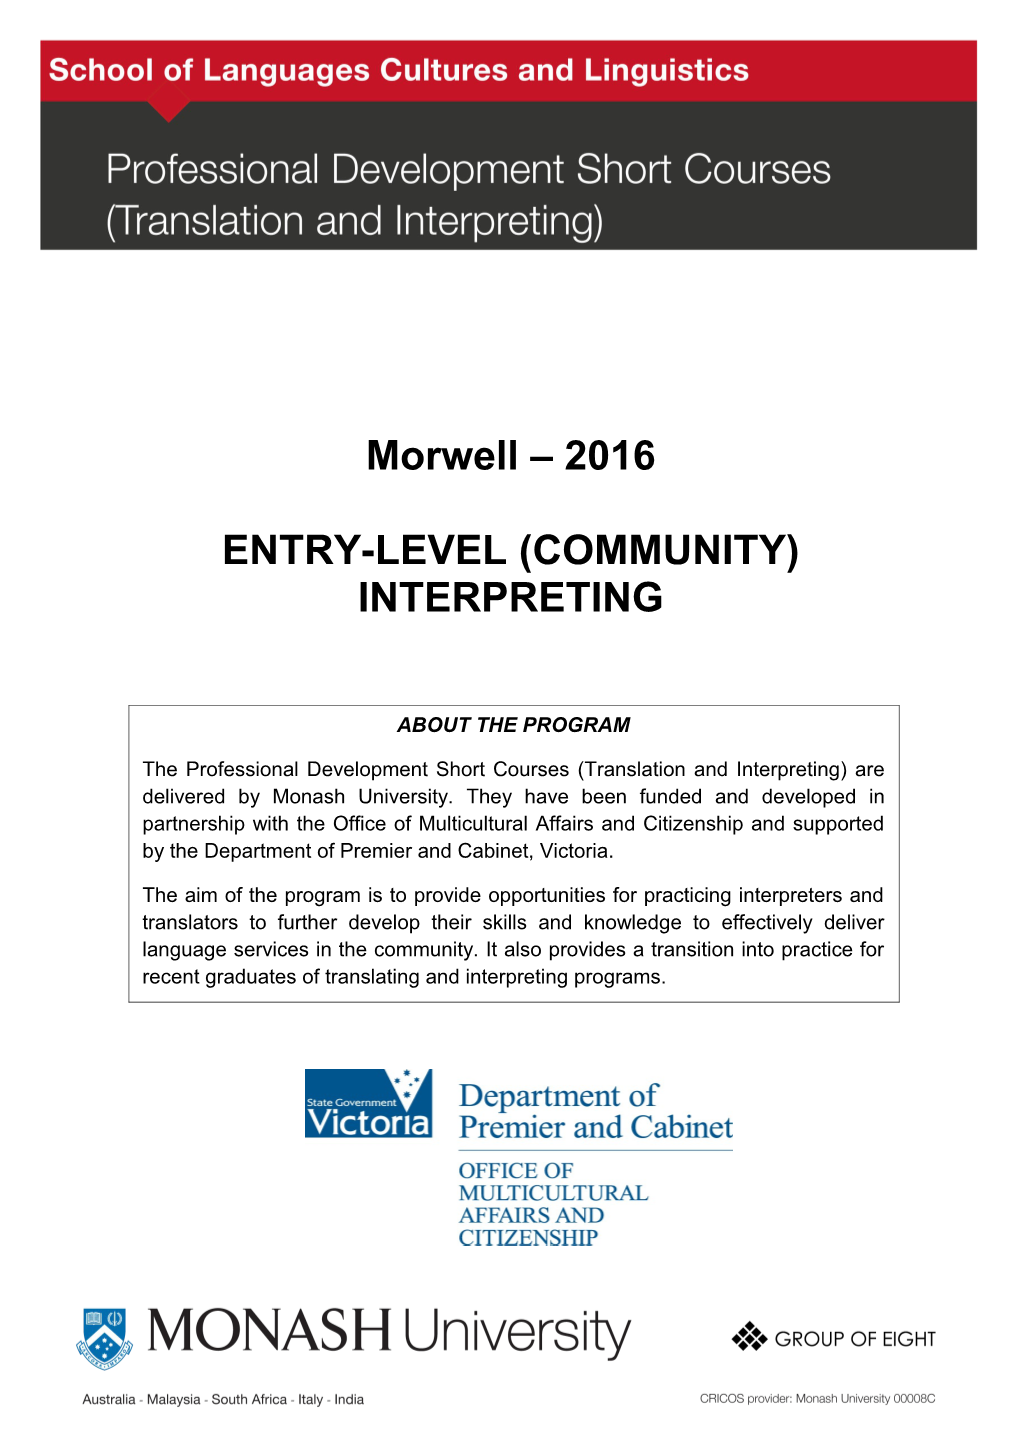 Entry-Level (Community) Interpreting